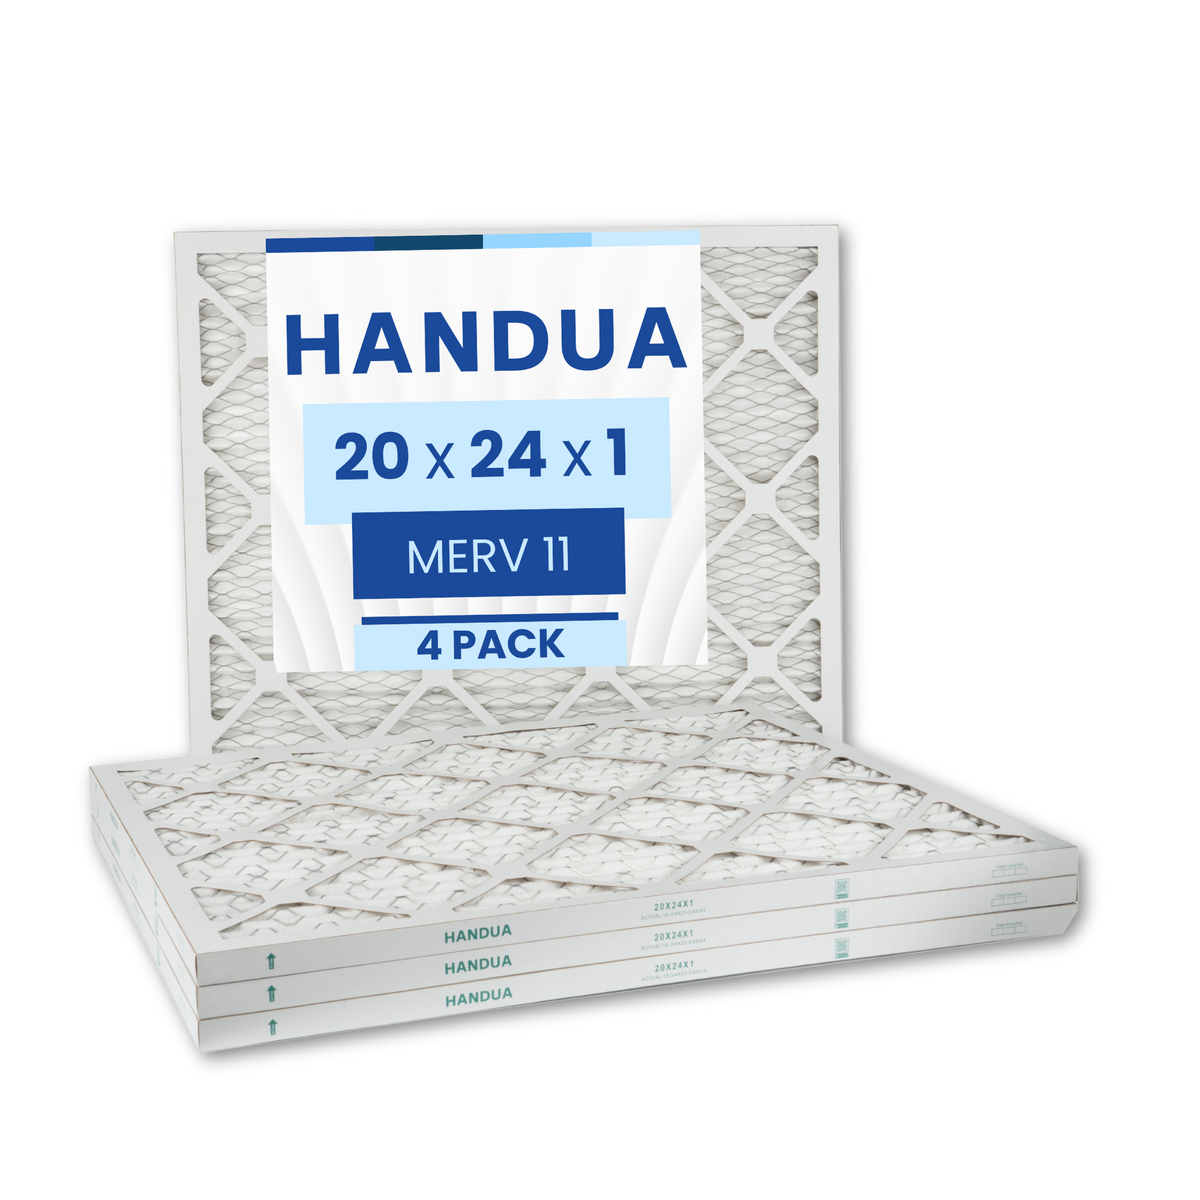 Handua 20x24x1 Air Filter MERV 11 Allergen Control, Plated Furnace AC Air Replacement Filter, 4 Pack (Actual Size: 19.75" x 23.75" x 0.75")